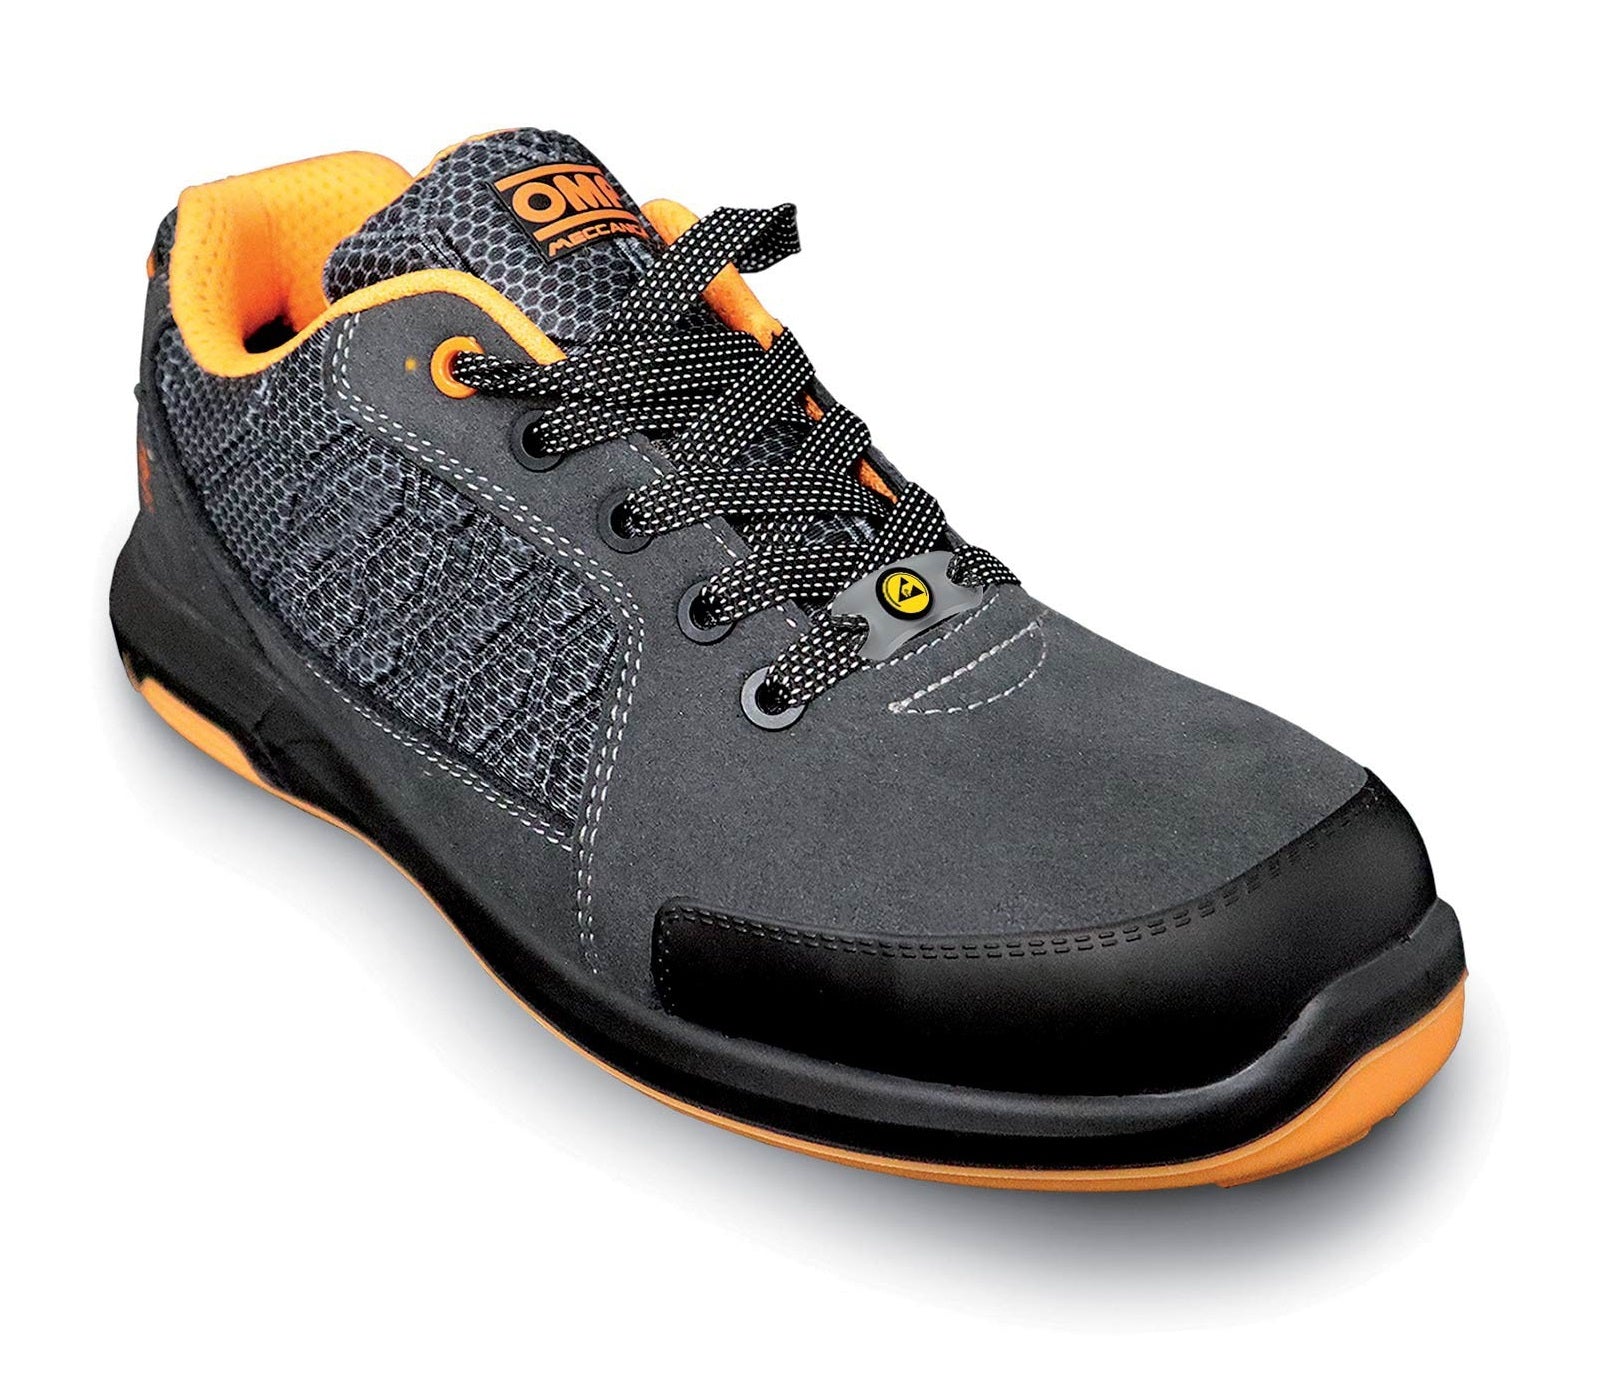 OMP OMPS90013620 Pro Sport Safety Mechanic's shoes, black/orange, size 36 Photo-0 